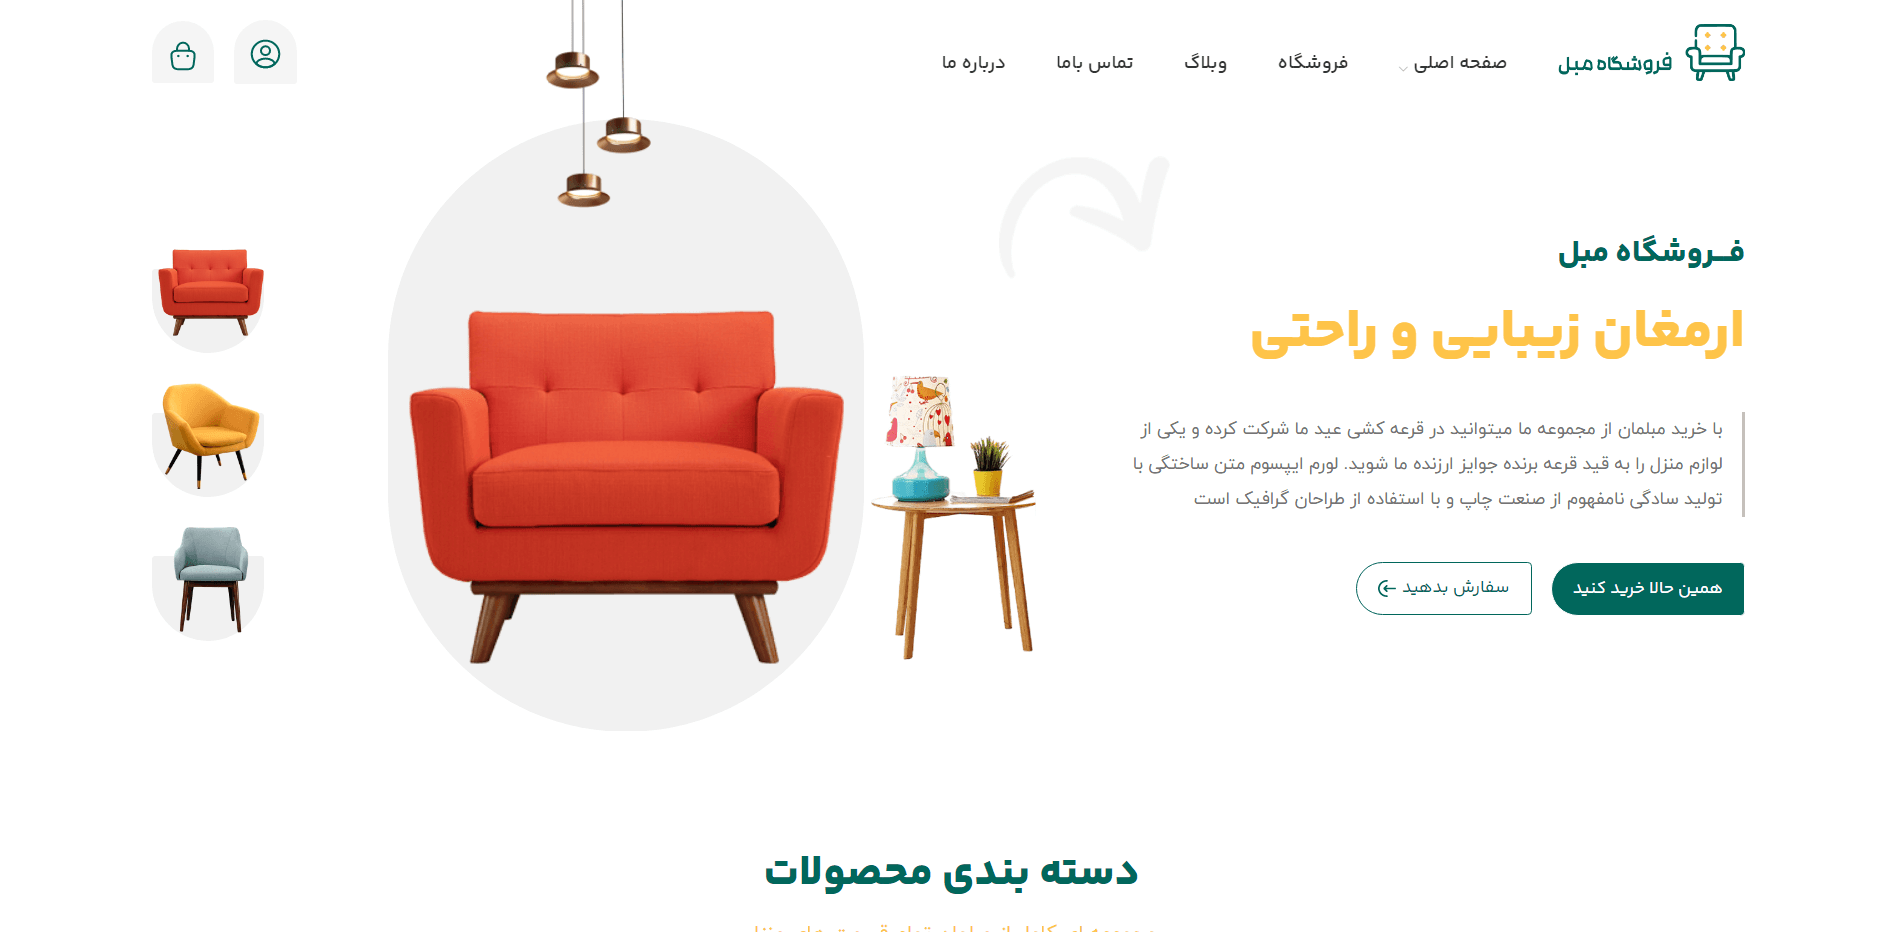 furniture main page 2 - طراحی وب سایت در استان خوزستان